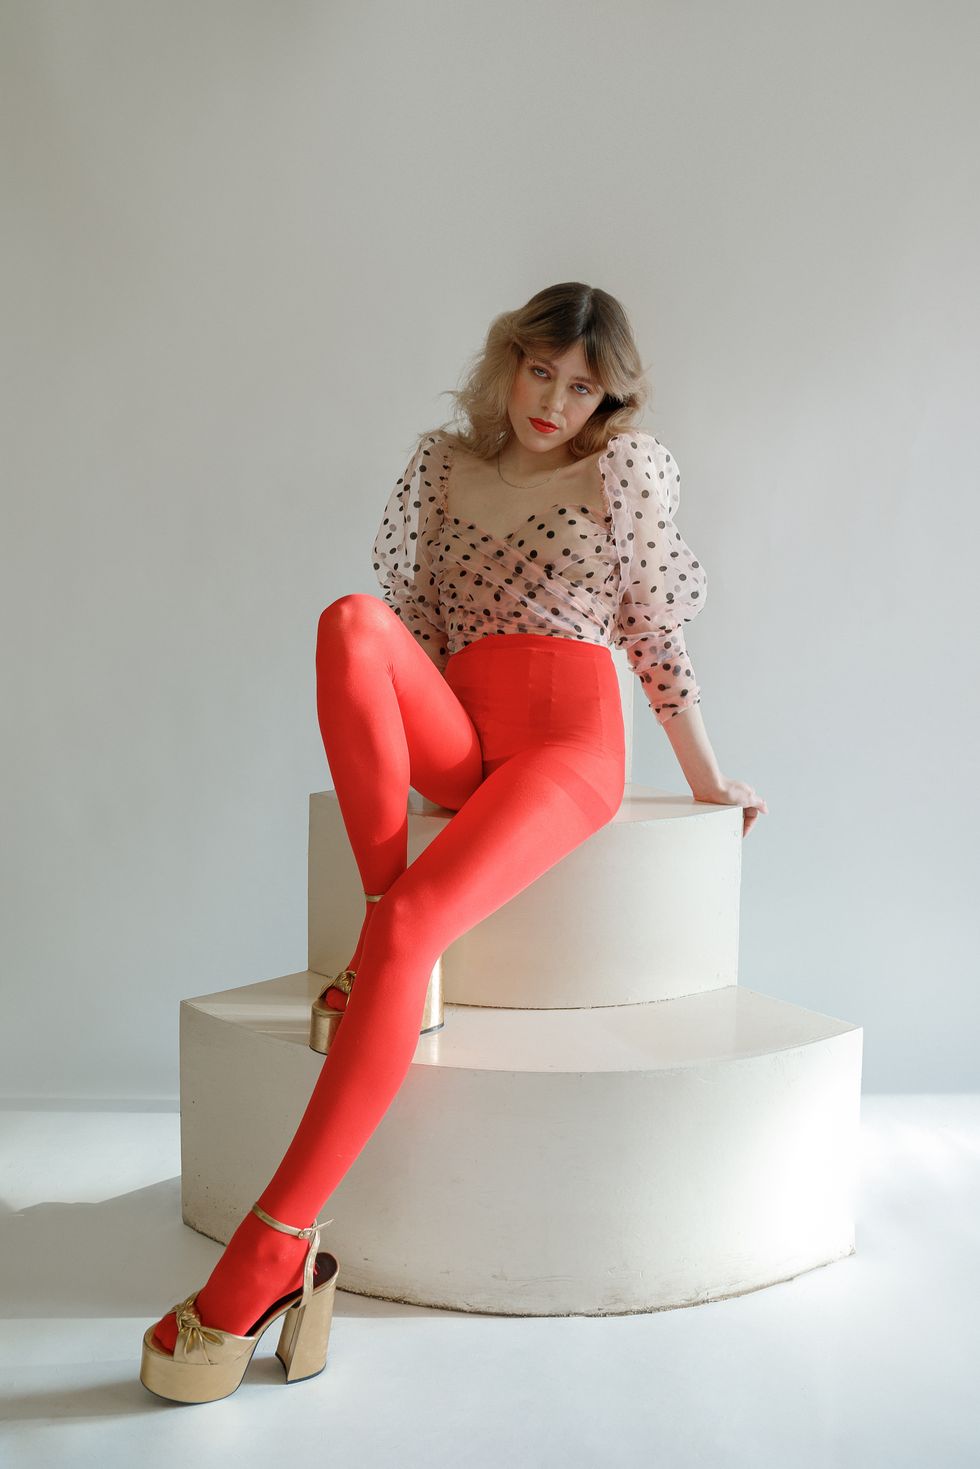 Buy JUST LOOKIT Ladies Fashion Women's Cotton Leggings Combo Pack 3  (White,Black,RED) Maternity Wear Legging (Red, White, Black) XXL at